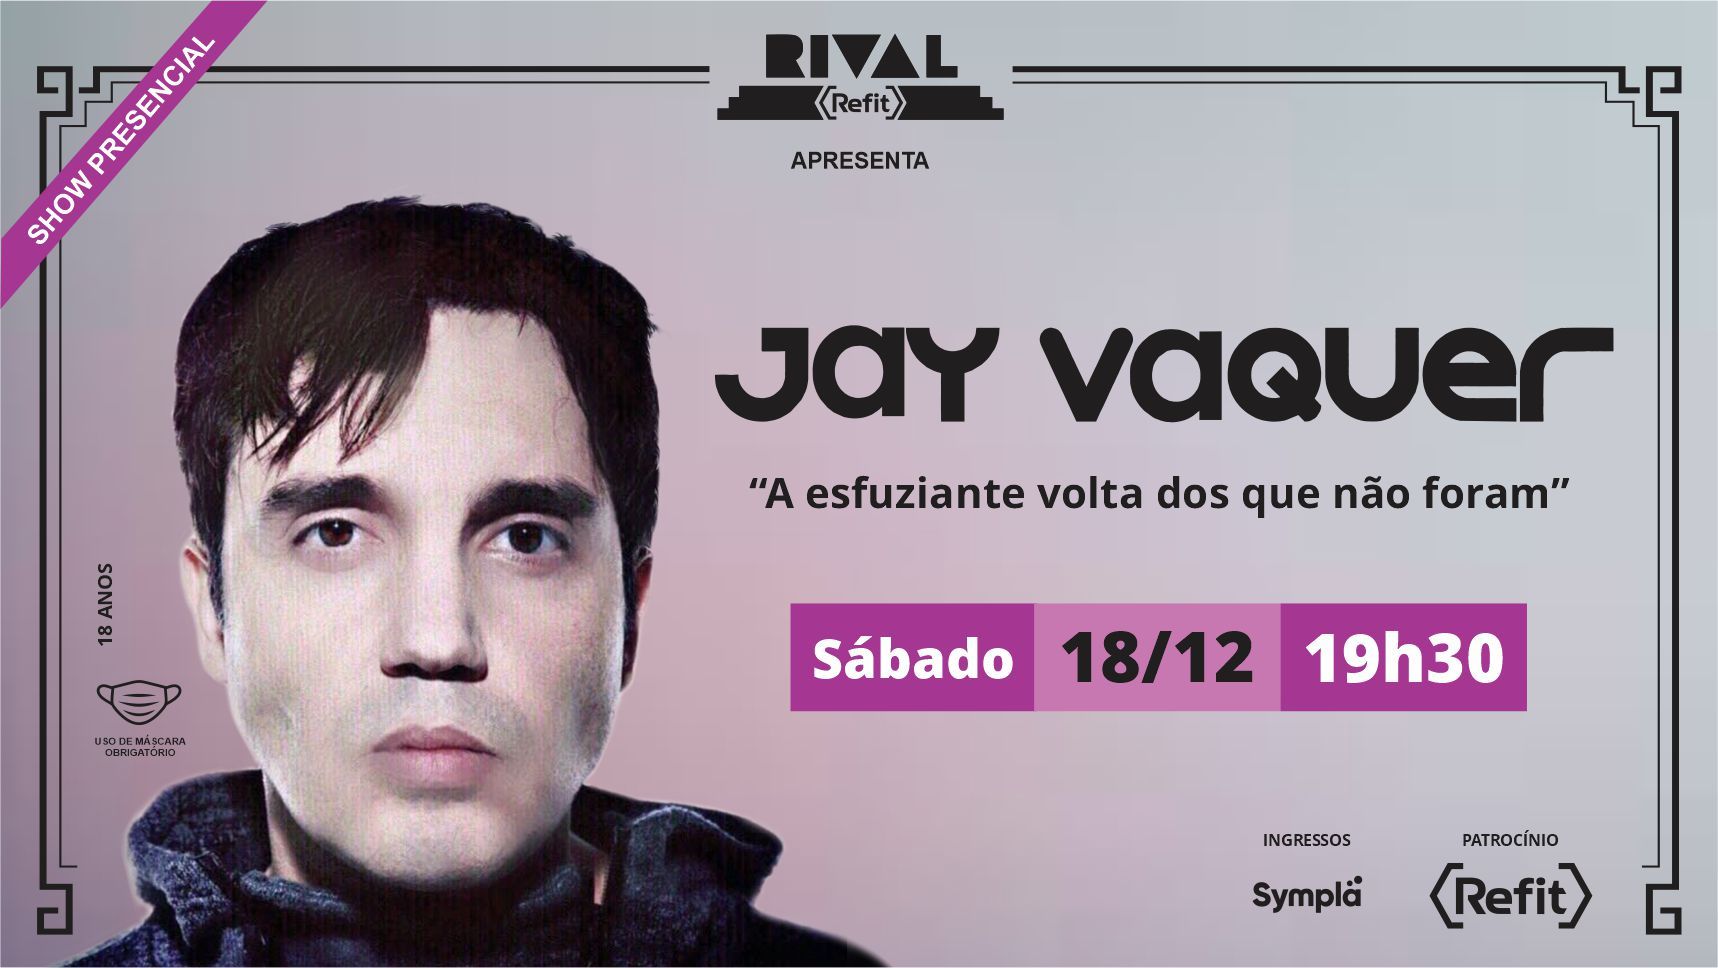 Jay Vaquer – Teatro Rival